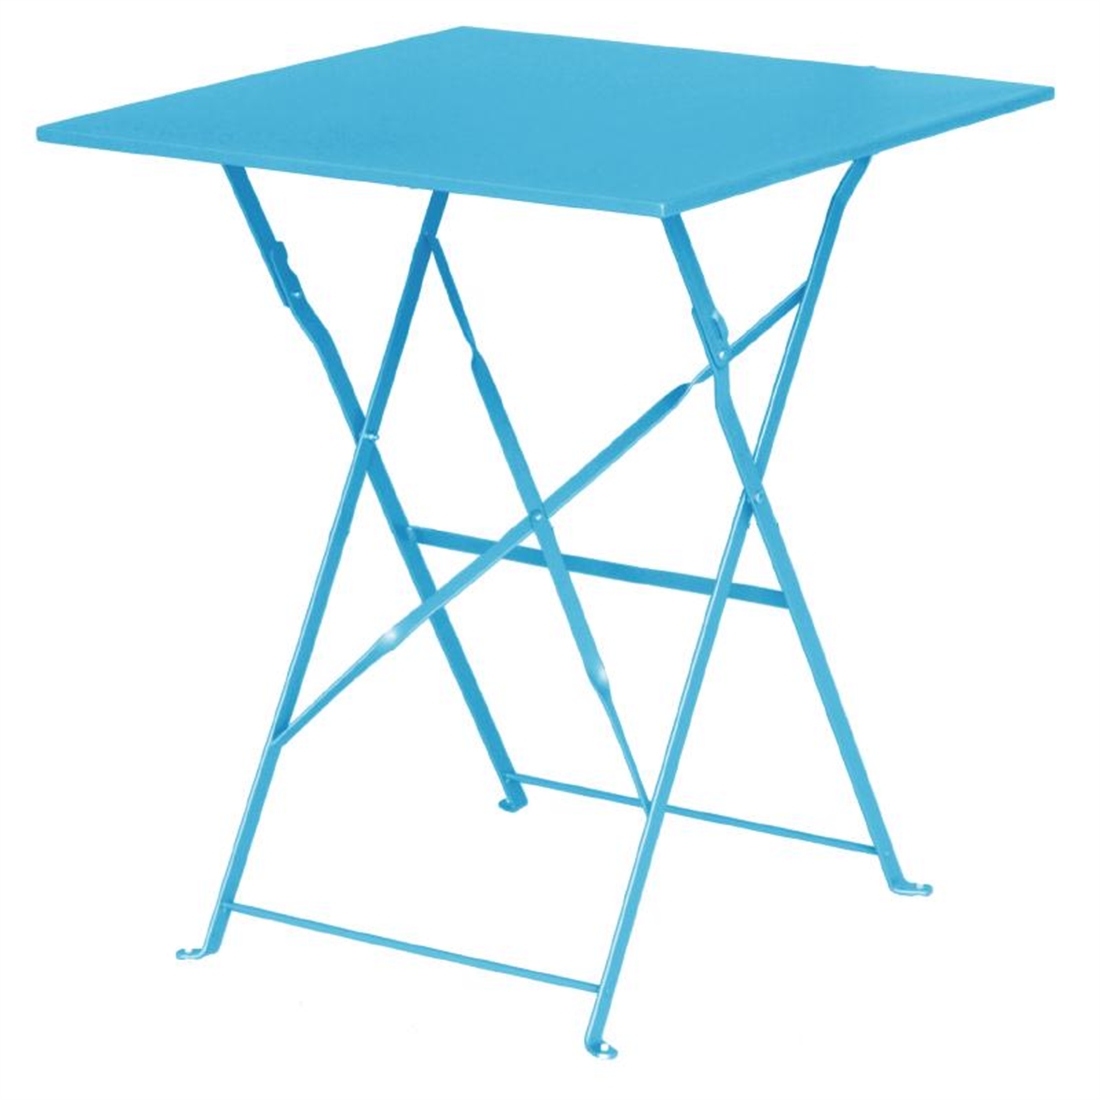 Bolero Seaside Blue Pavement Style Steel Table Square 600mm